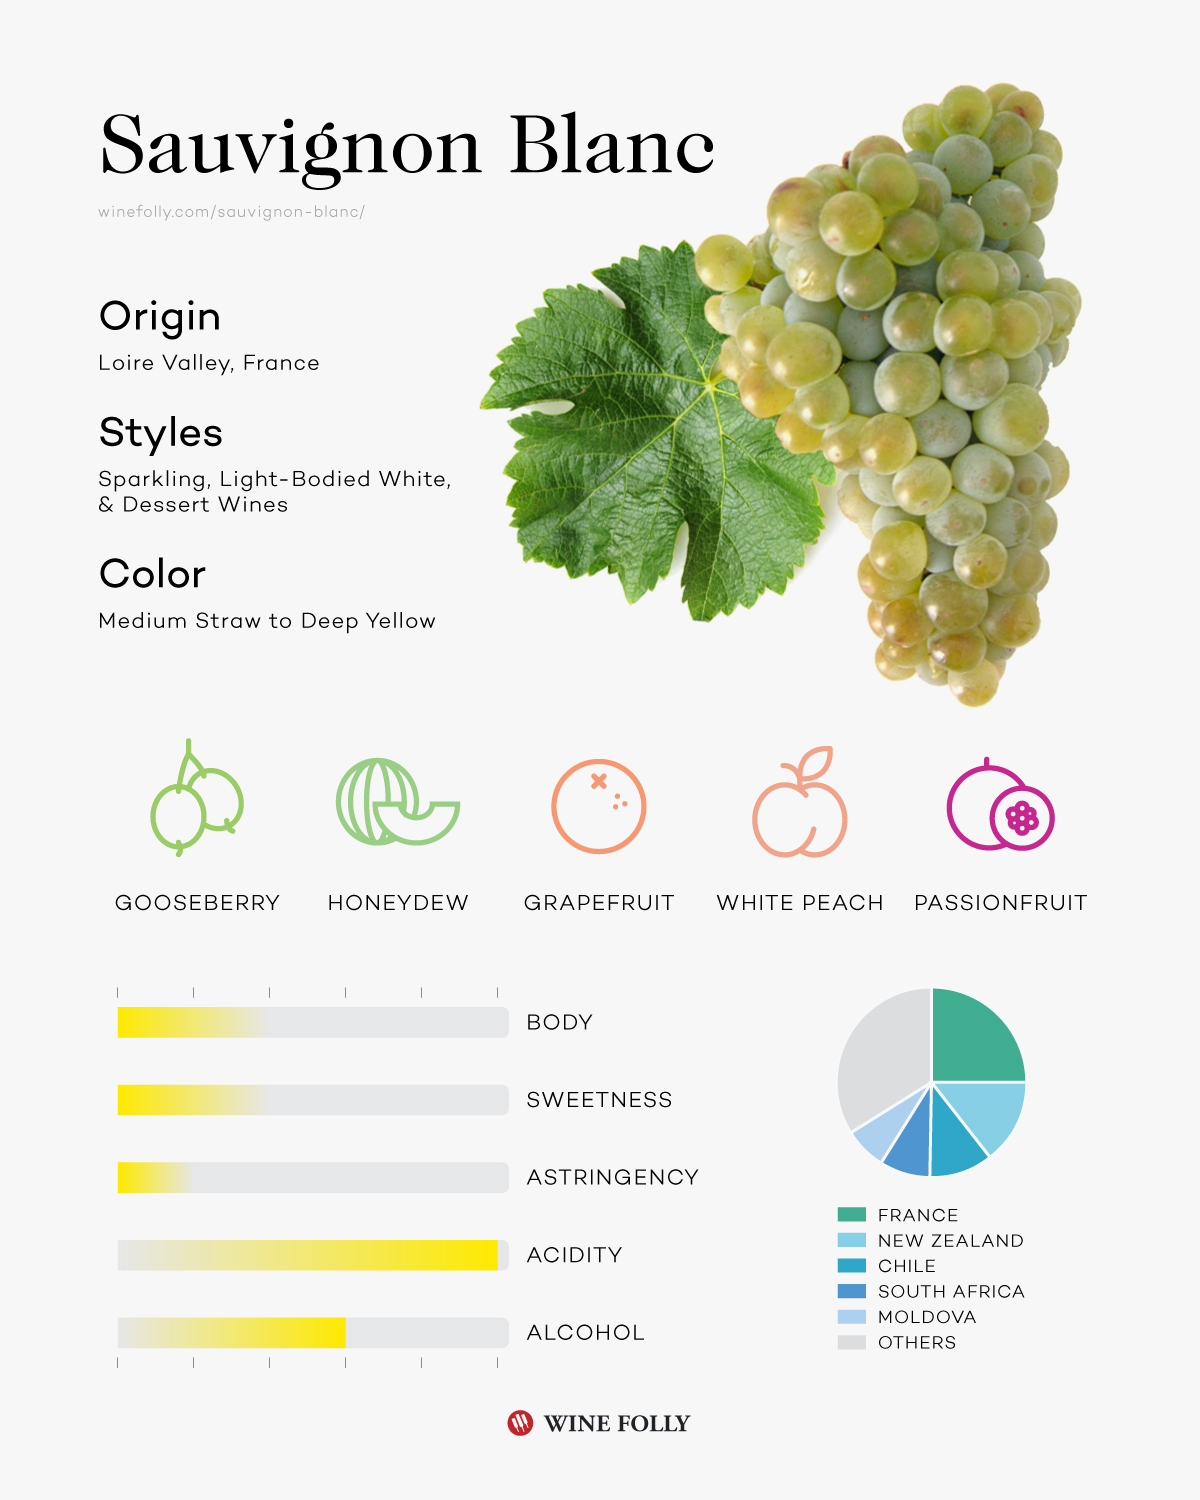 Sauvignon Blanc wine taste profile infographic by Wine Folly 2019